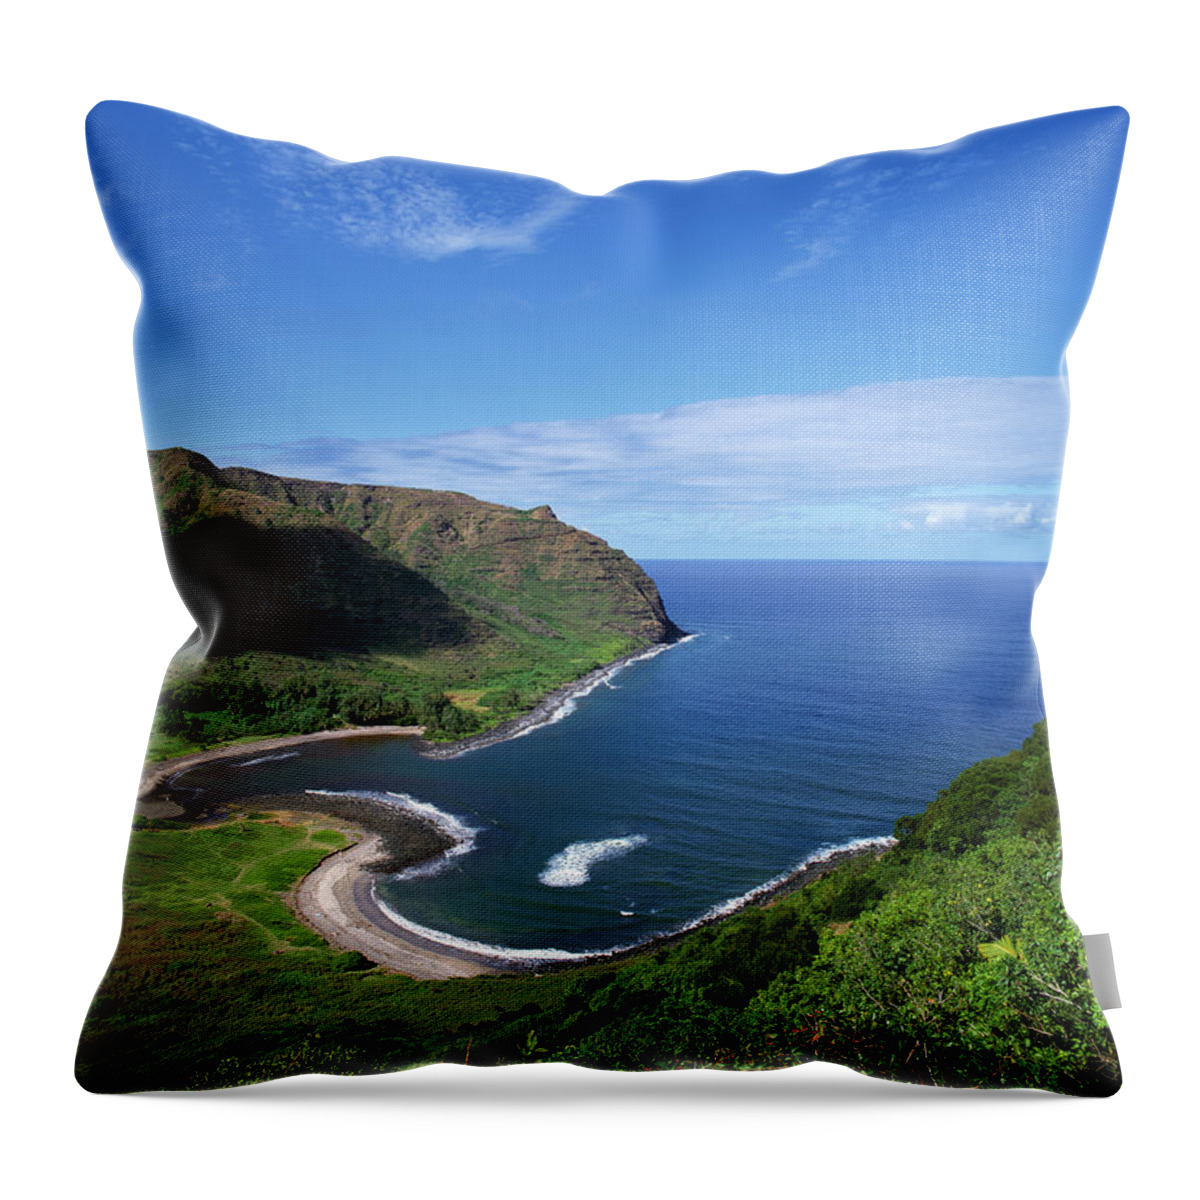 Scenics Throw Pillow featuring the photograph Usa, Hawaiian Islands, Molokai, Halawa by Maremagnum